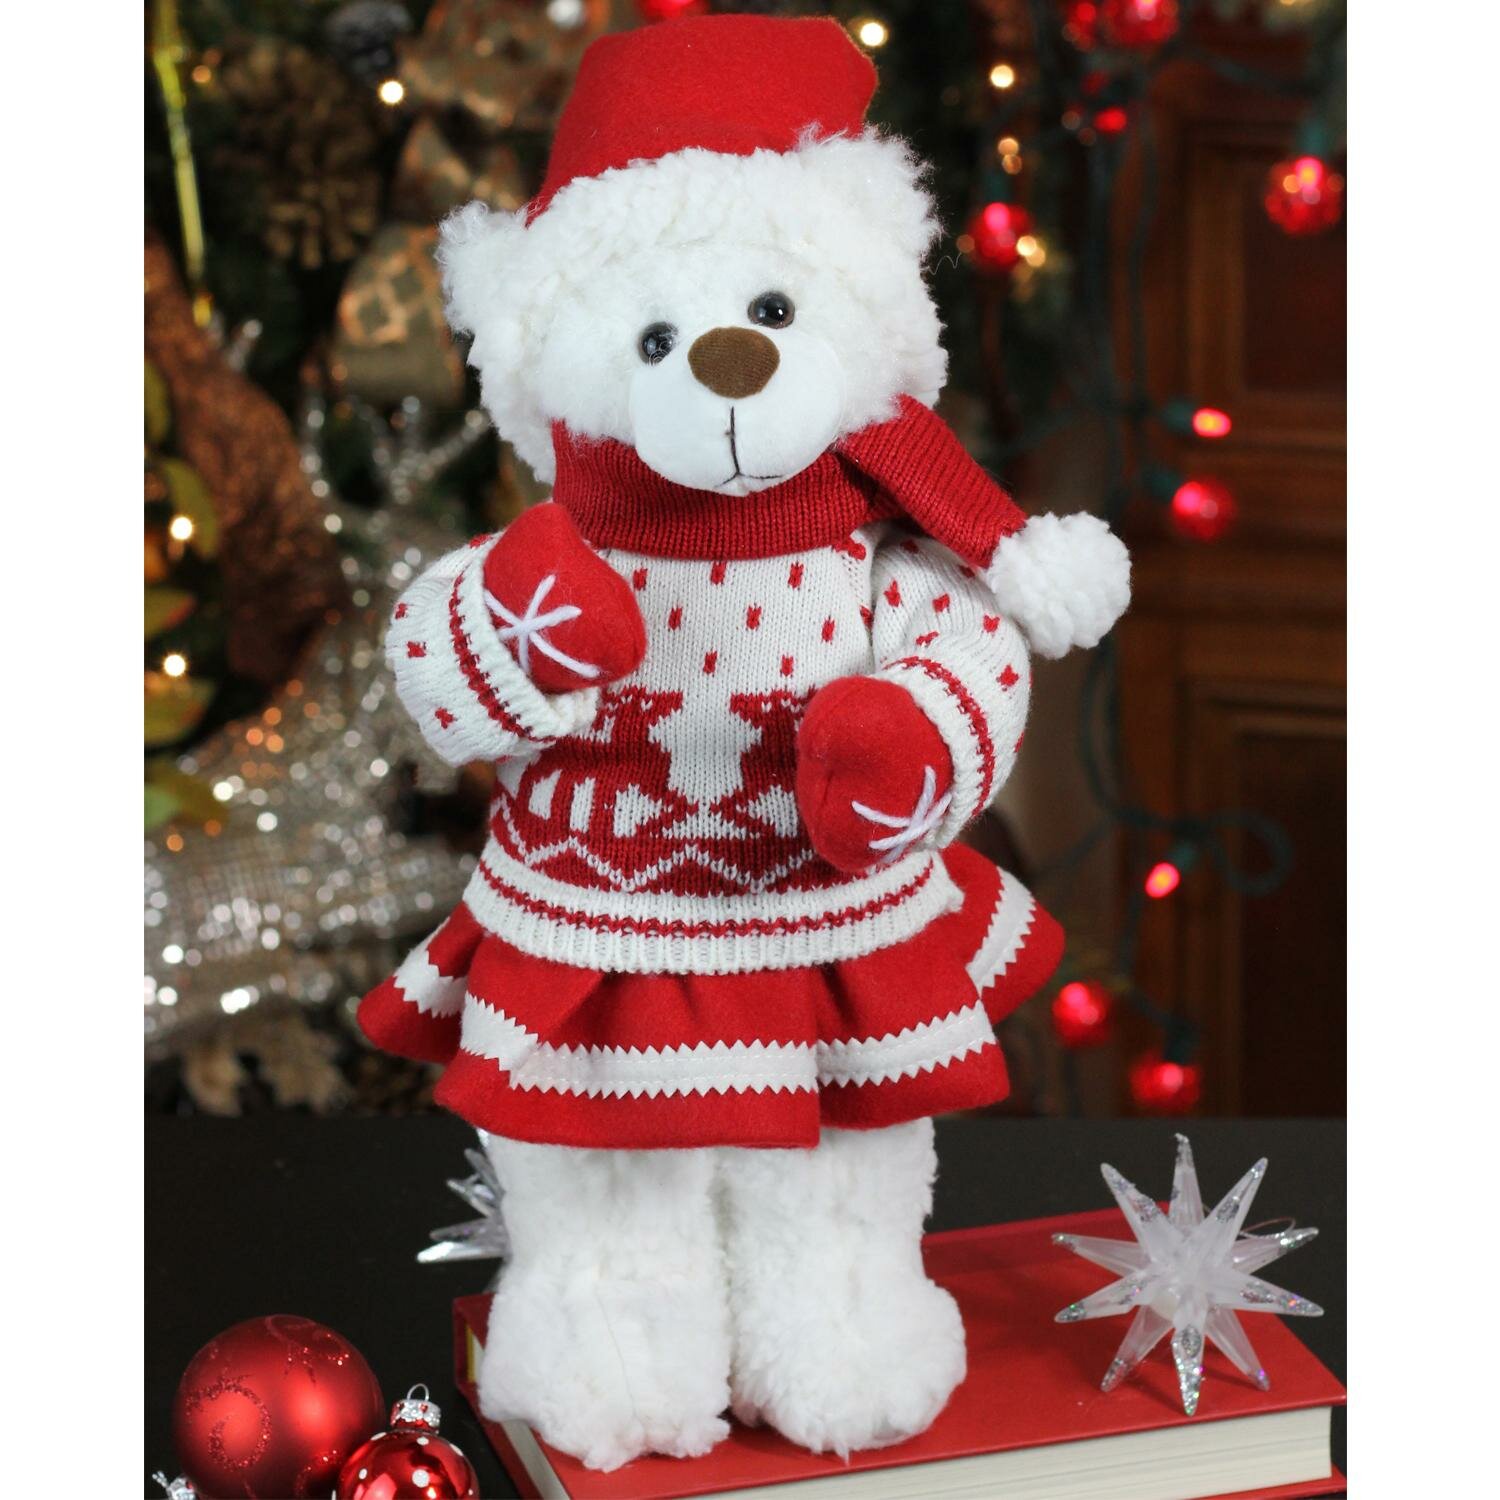 Vintage Christmas winter teddy bear sweatshirt.